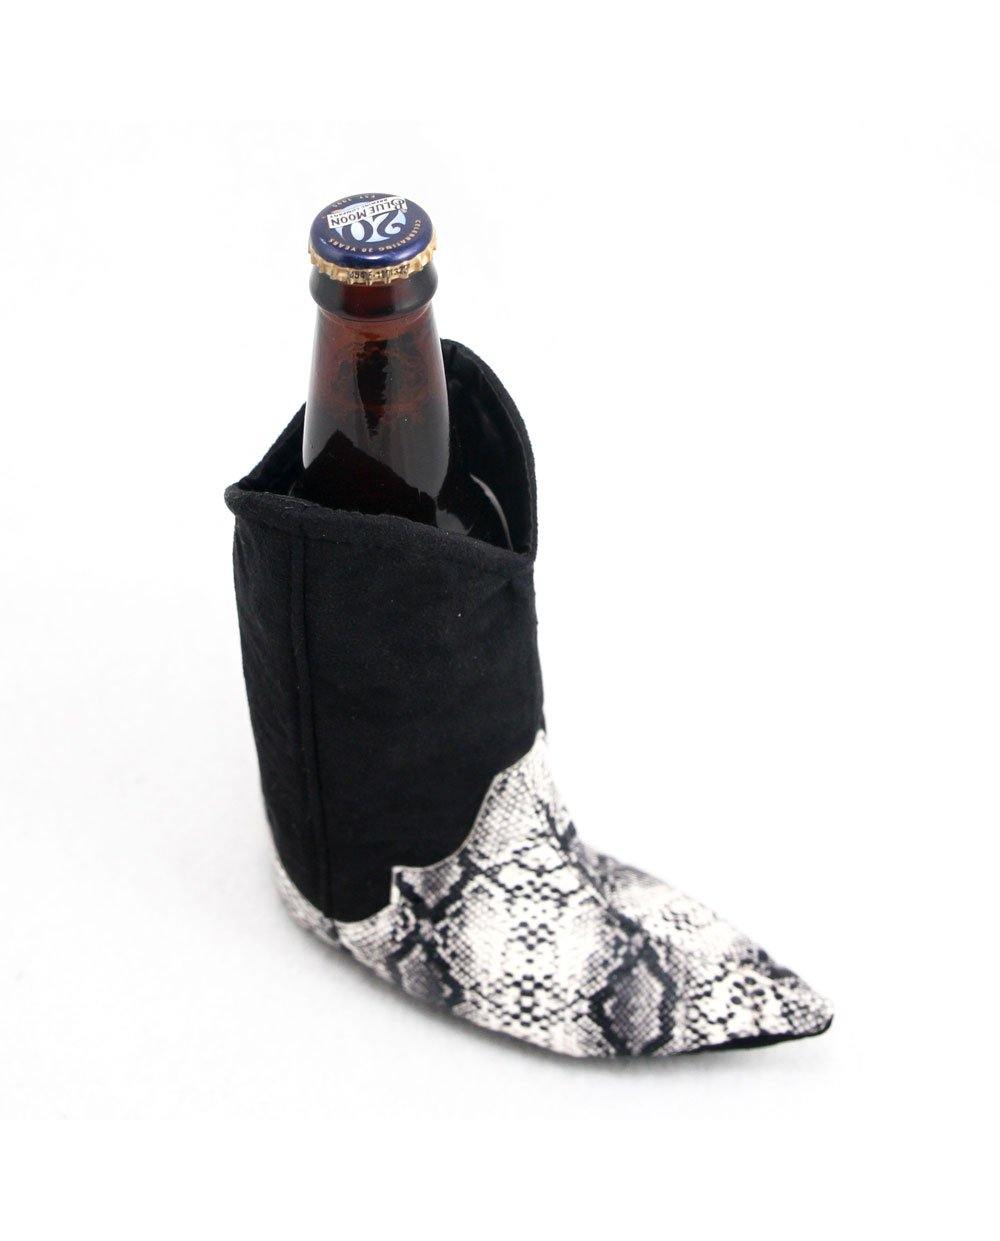 Cowboy Boot Beer Koozie by Tipsy Totes